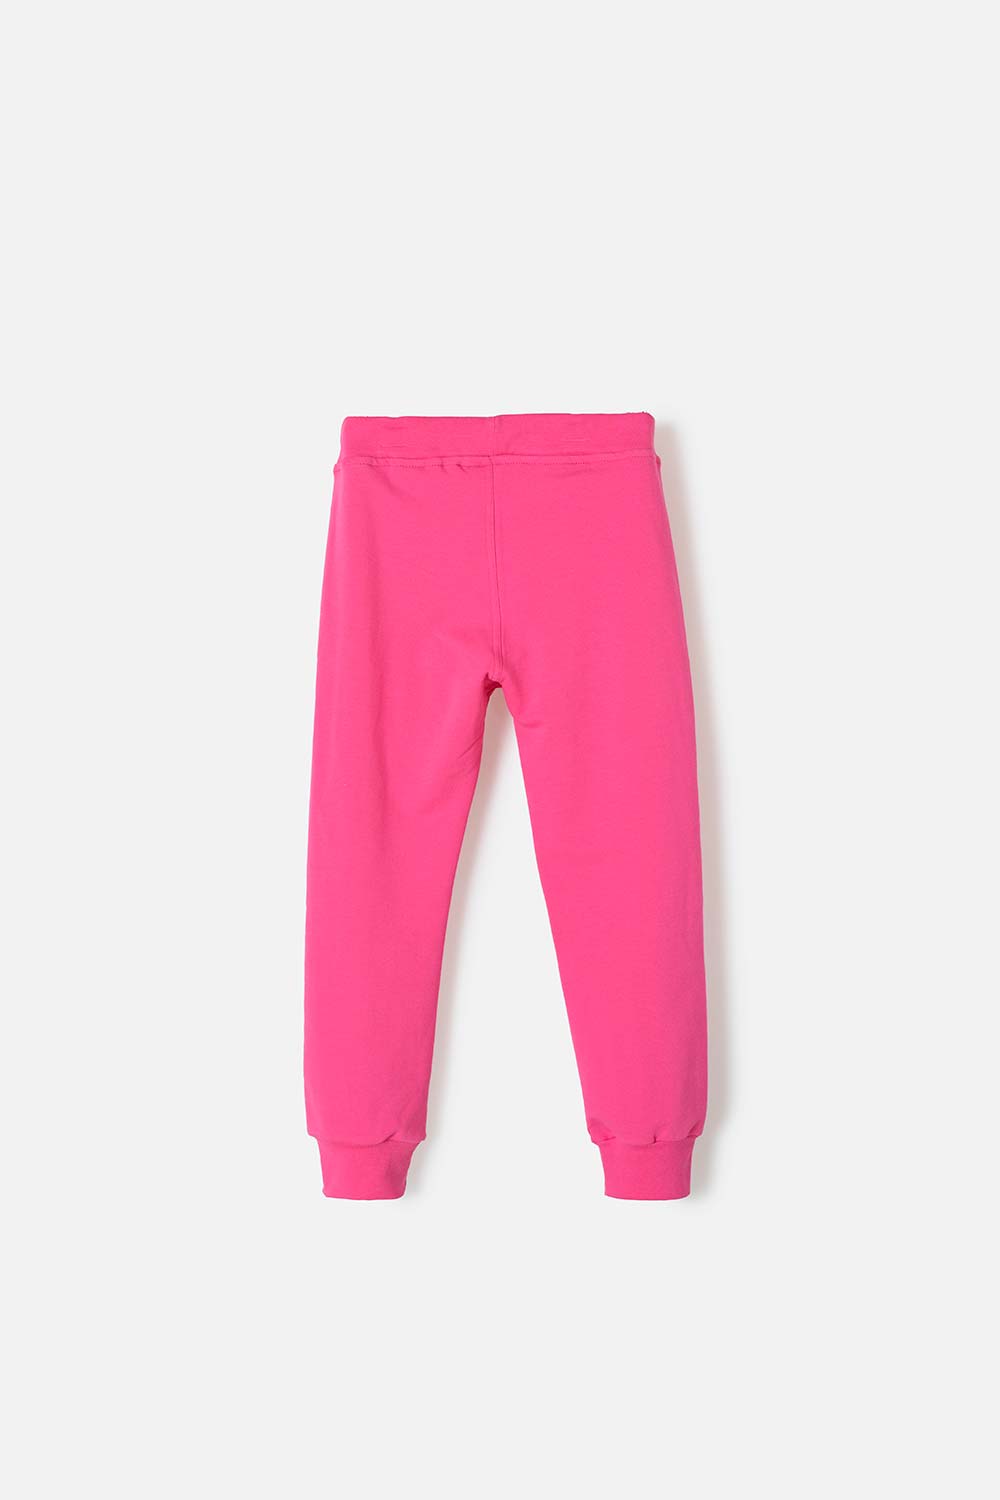 MNX Pantalones Industrial, rosa polvorienta - MNX Sportswear